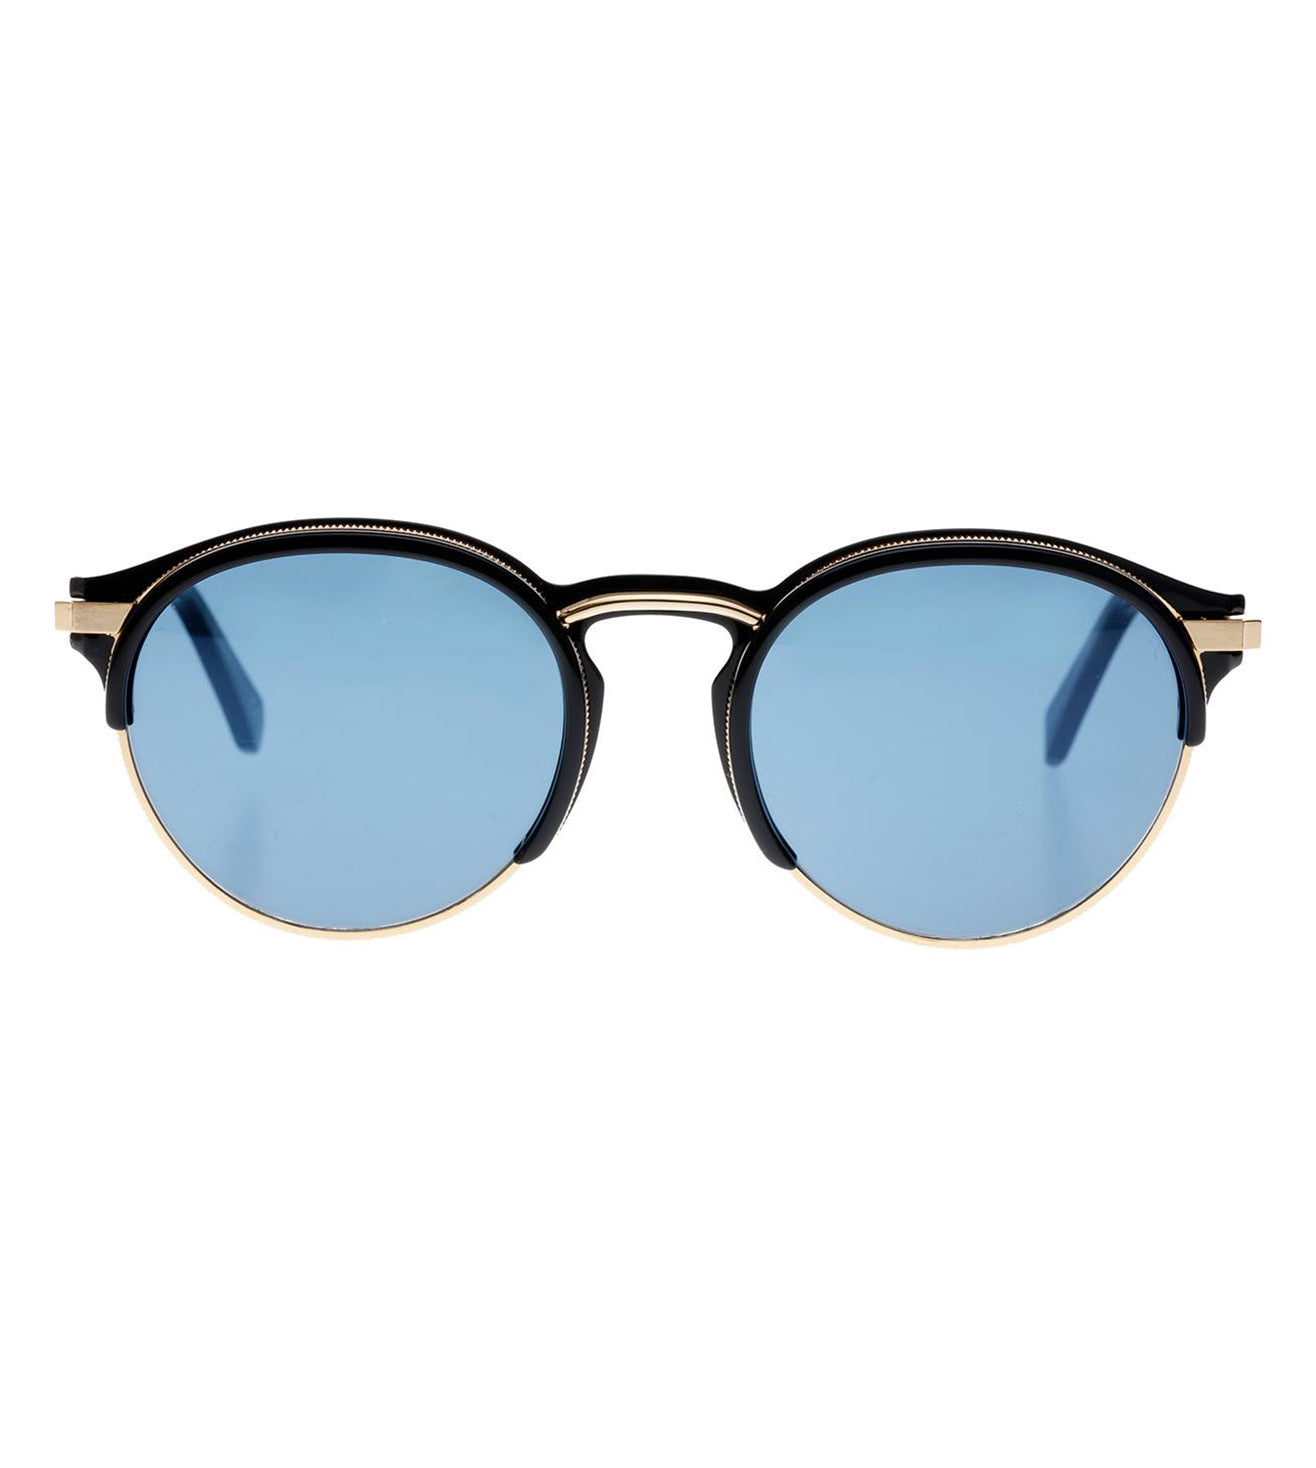 Omega Men's Blue Round Sunglasses